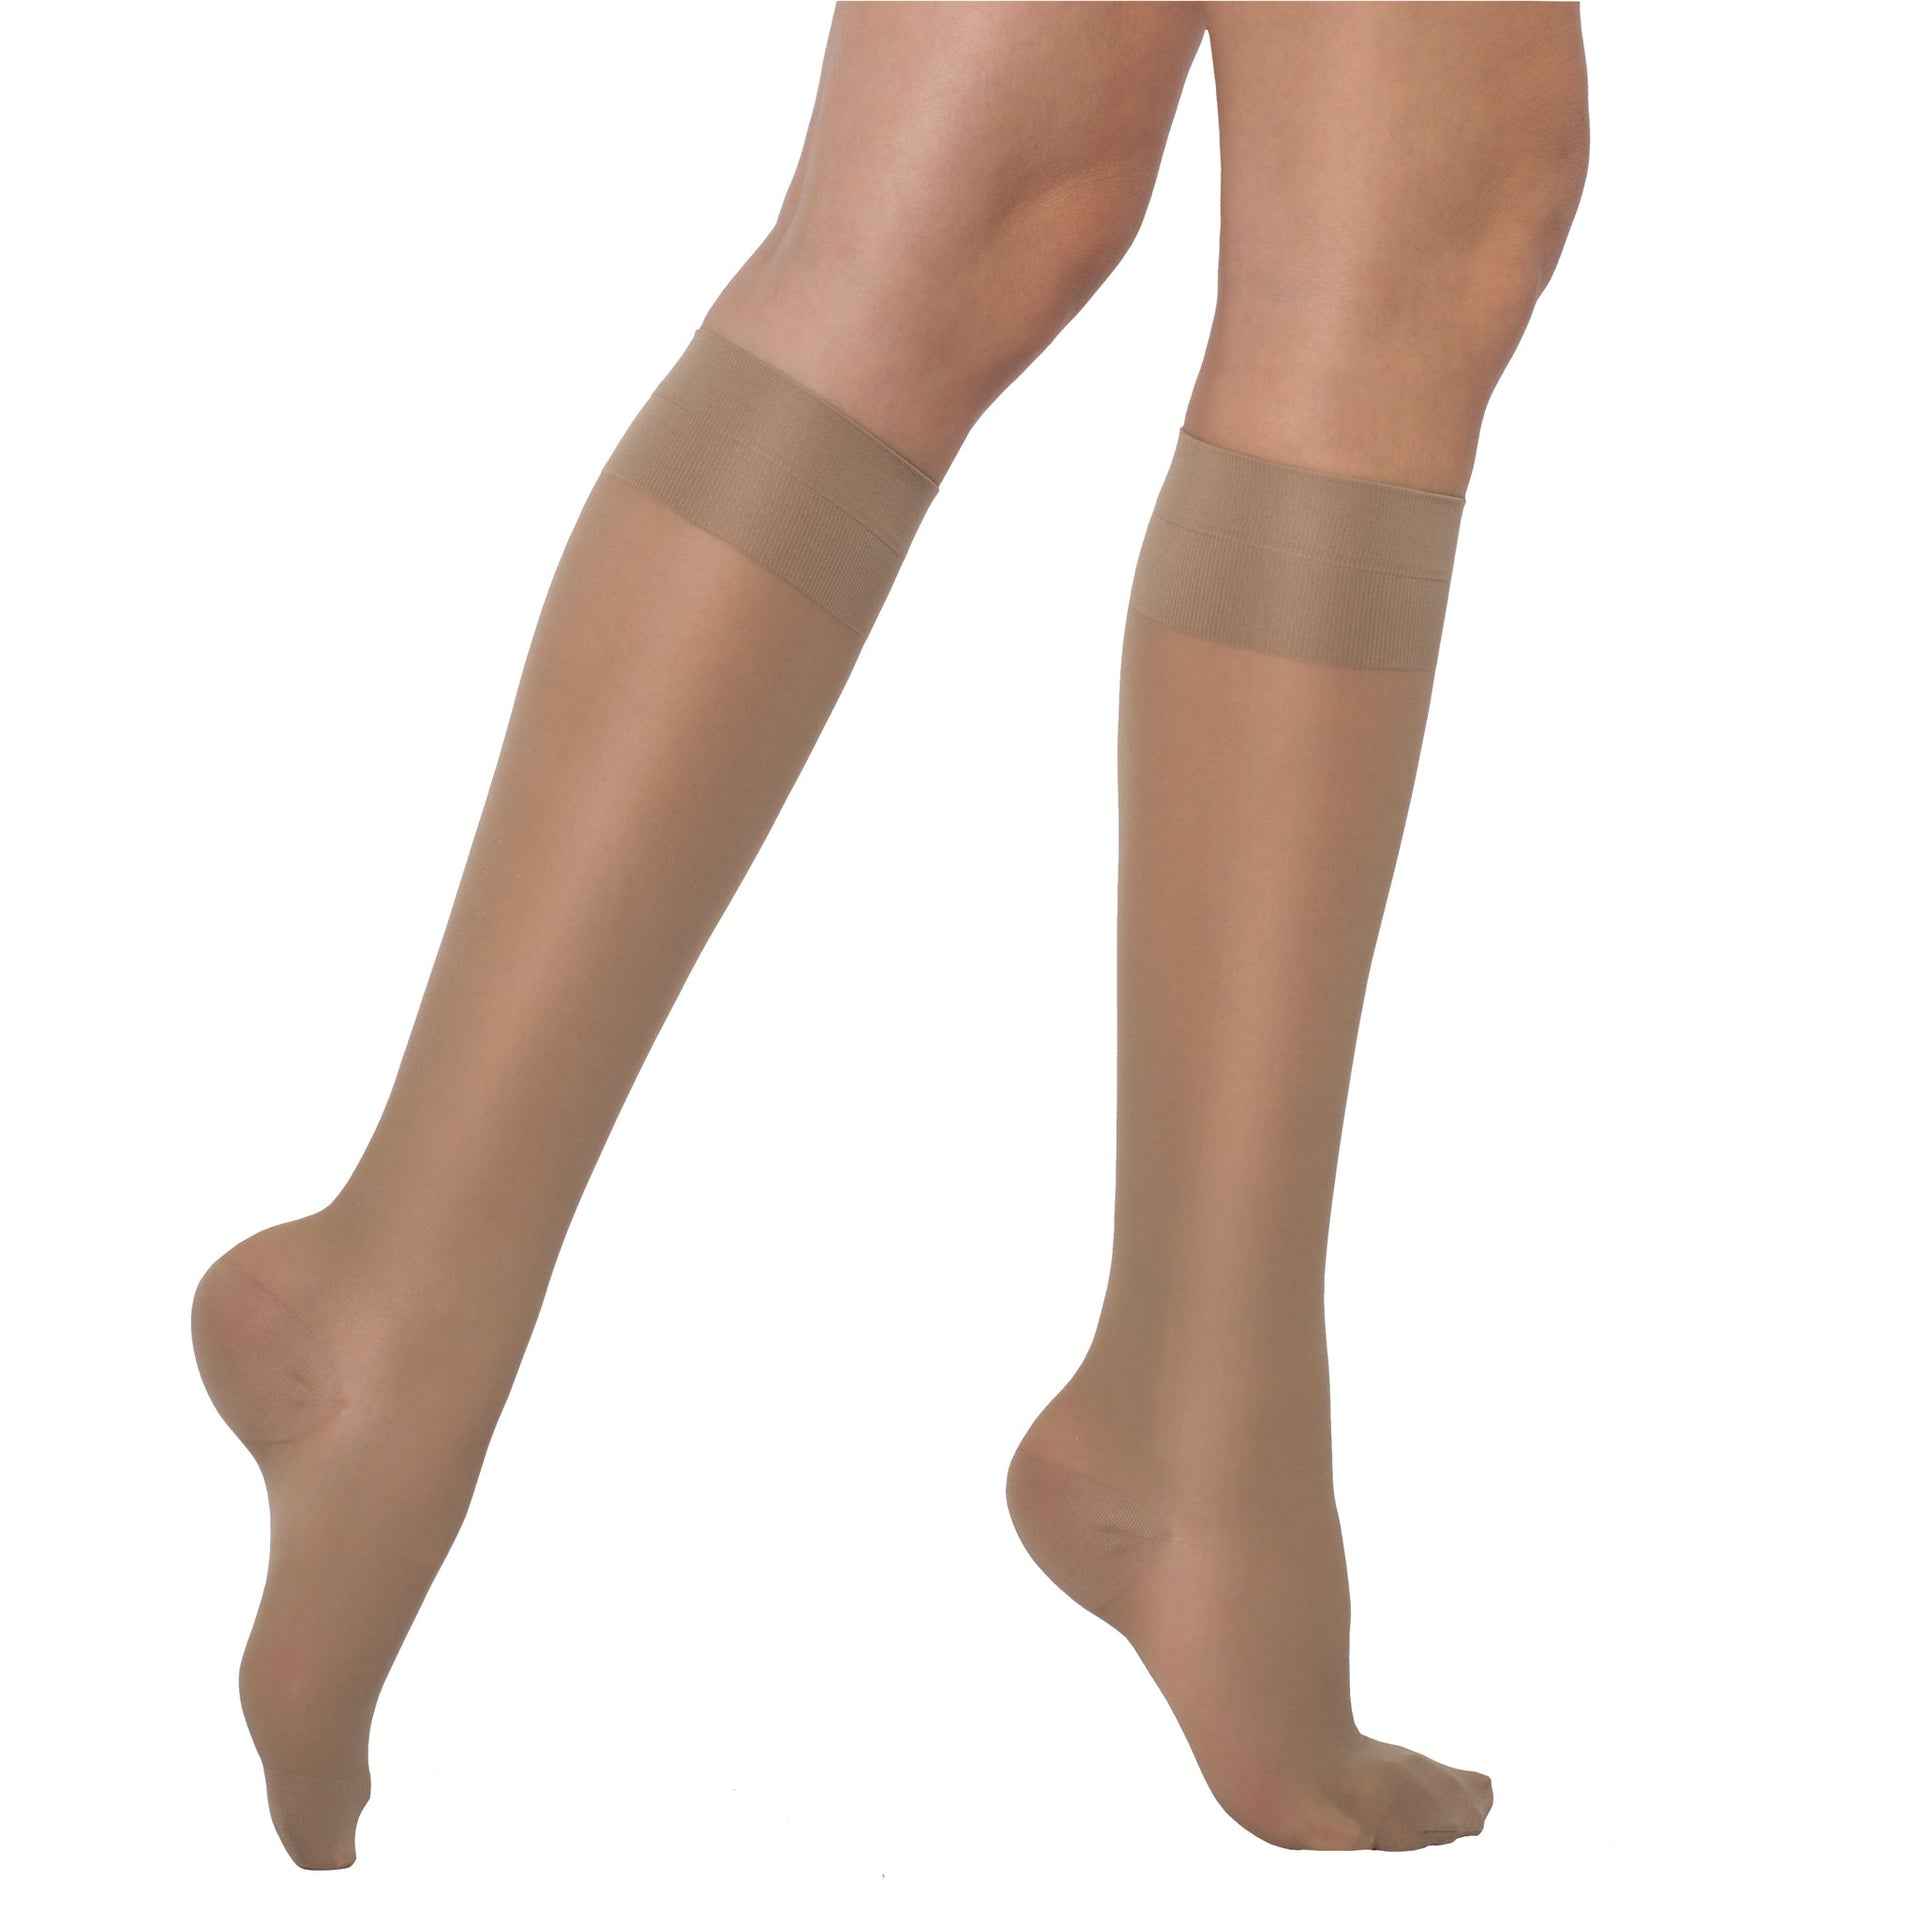 Healthweir Graduated Compression Knee Highs 15-20 mmHg Sheer Stockings